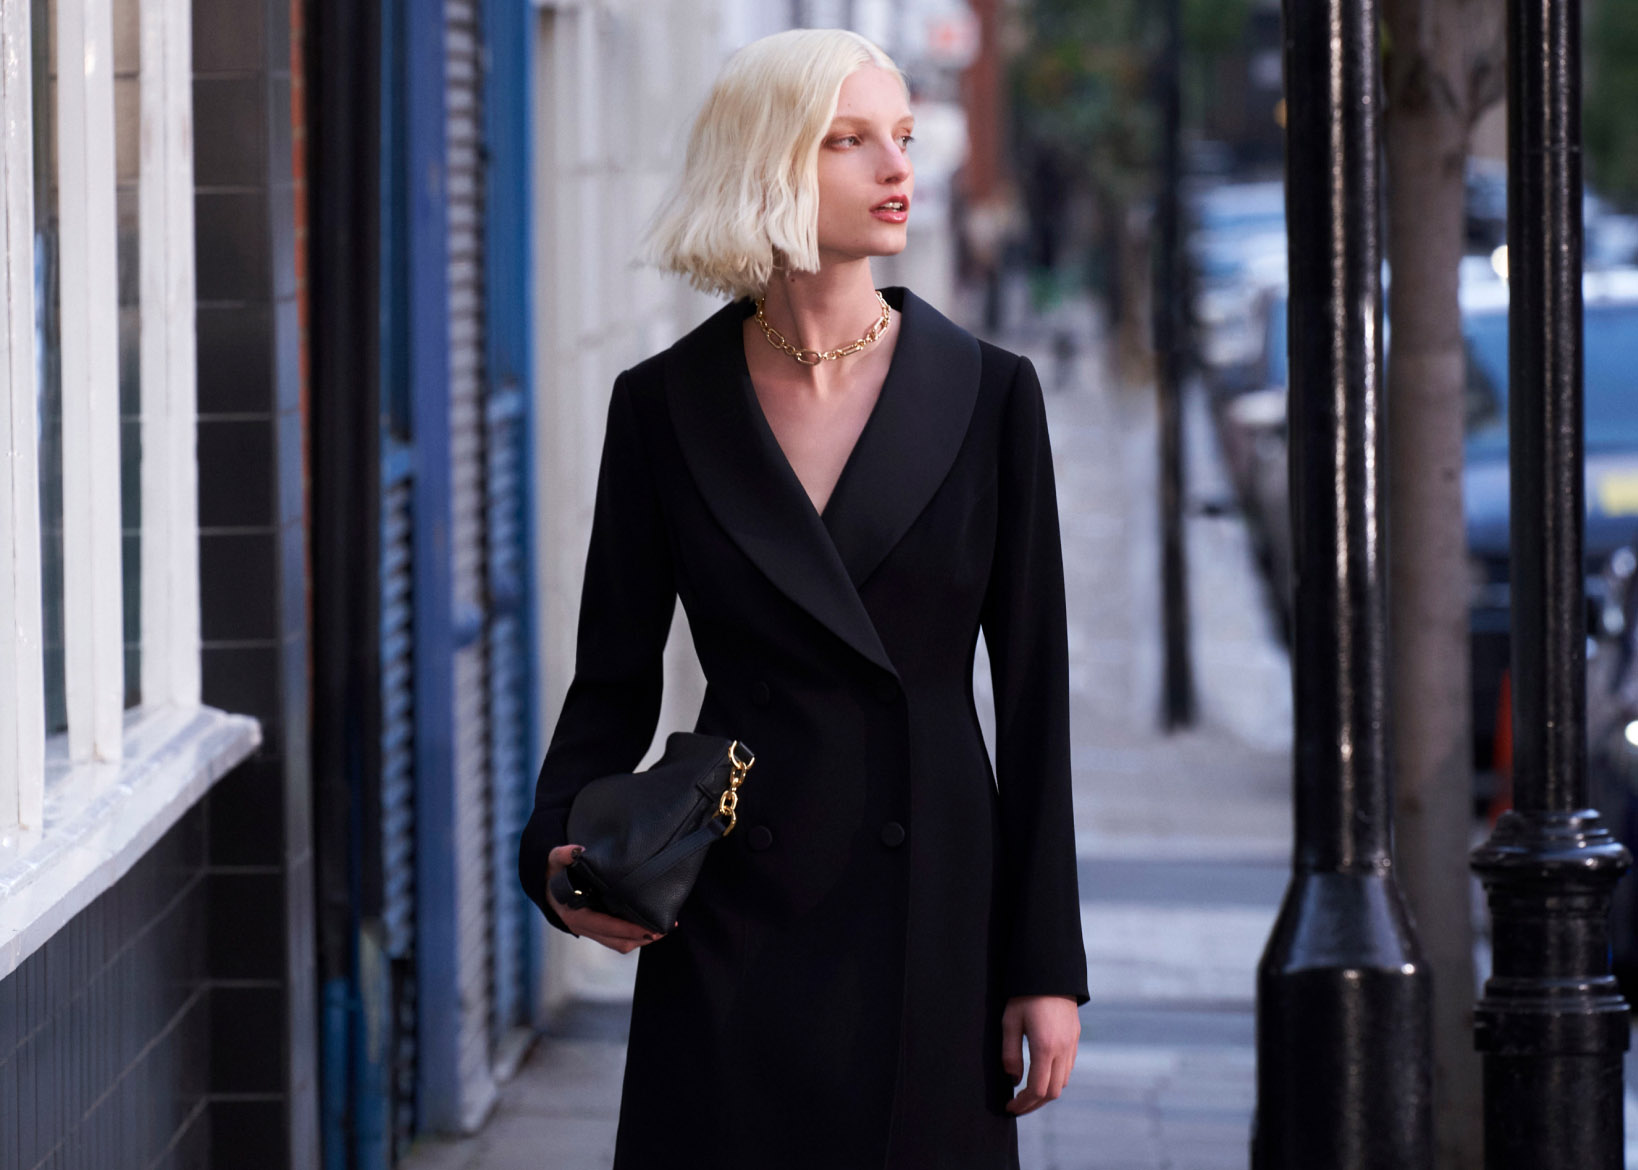 Model photographed walking down a street wearing a black tuxedo mini dress.